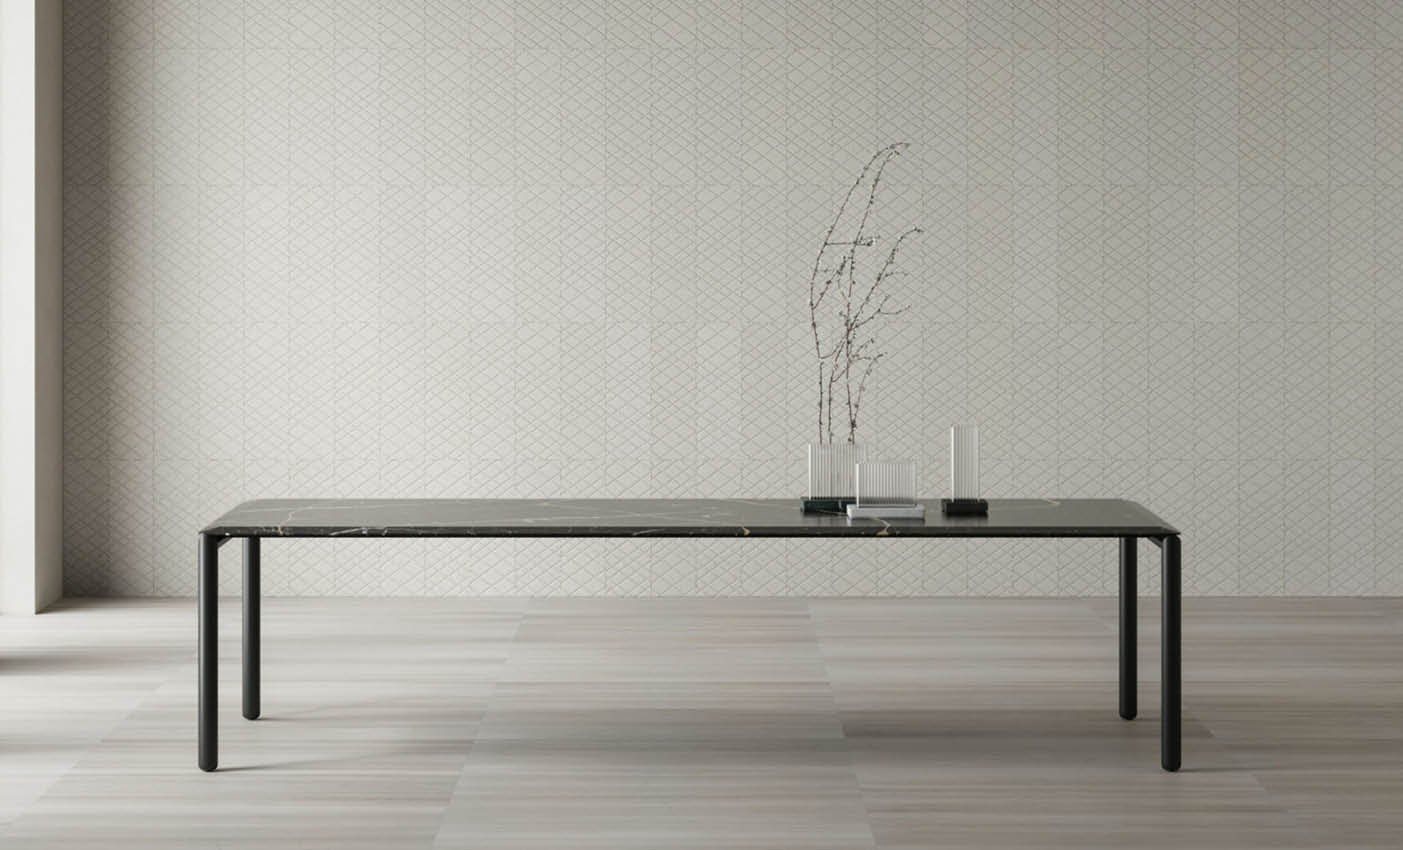 design for soul table by salvatori presented during milan design week 2020